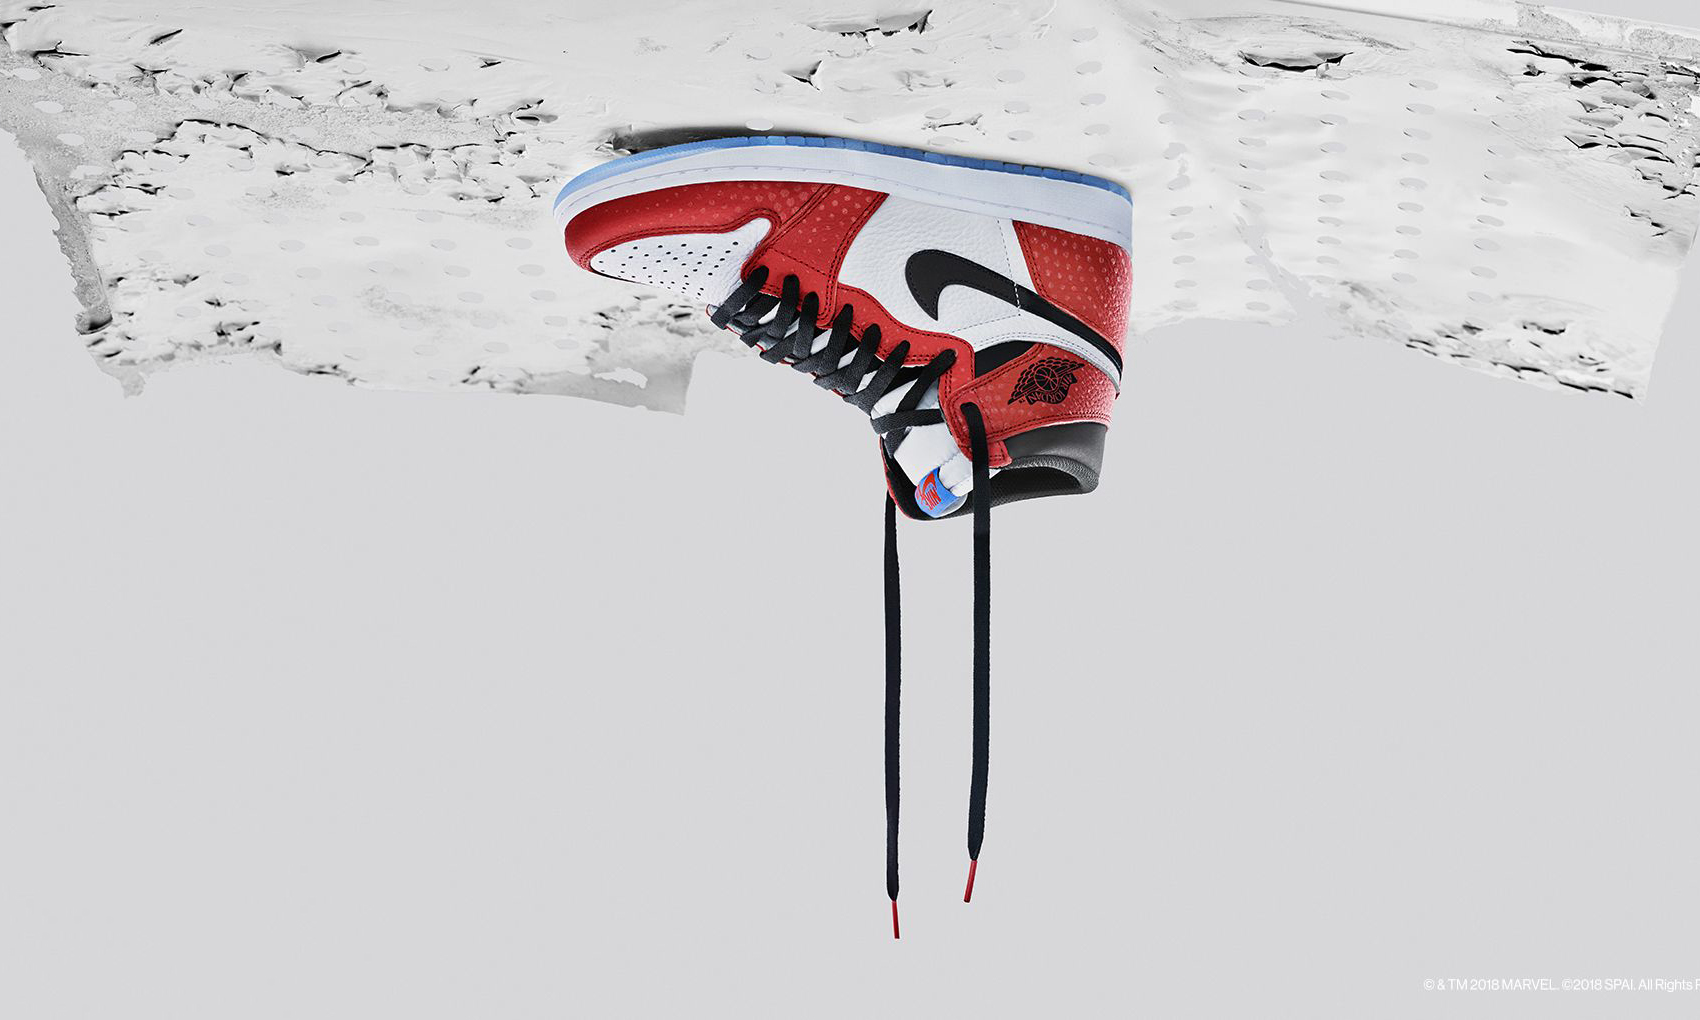 Air Jordan I “蜘蛛侠” 炒到 3 千多块，合理吗？